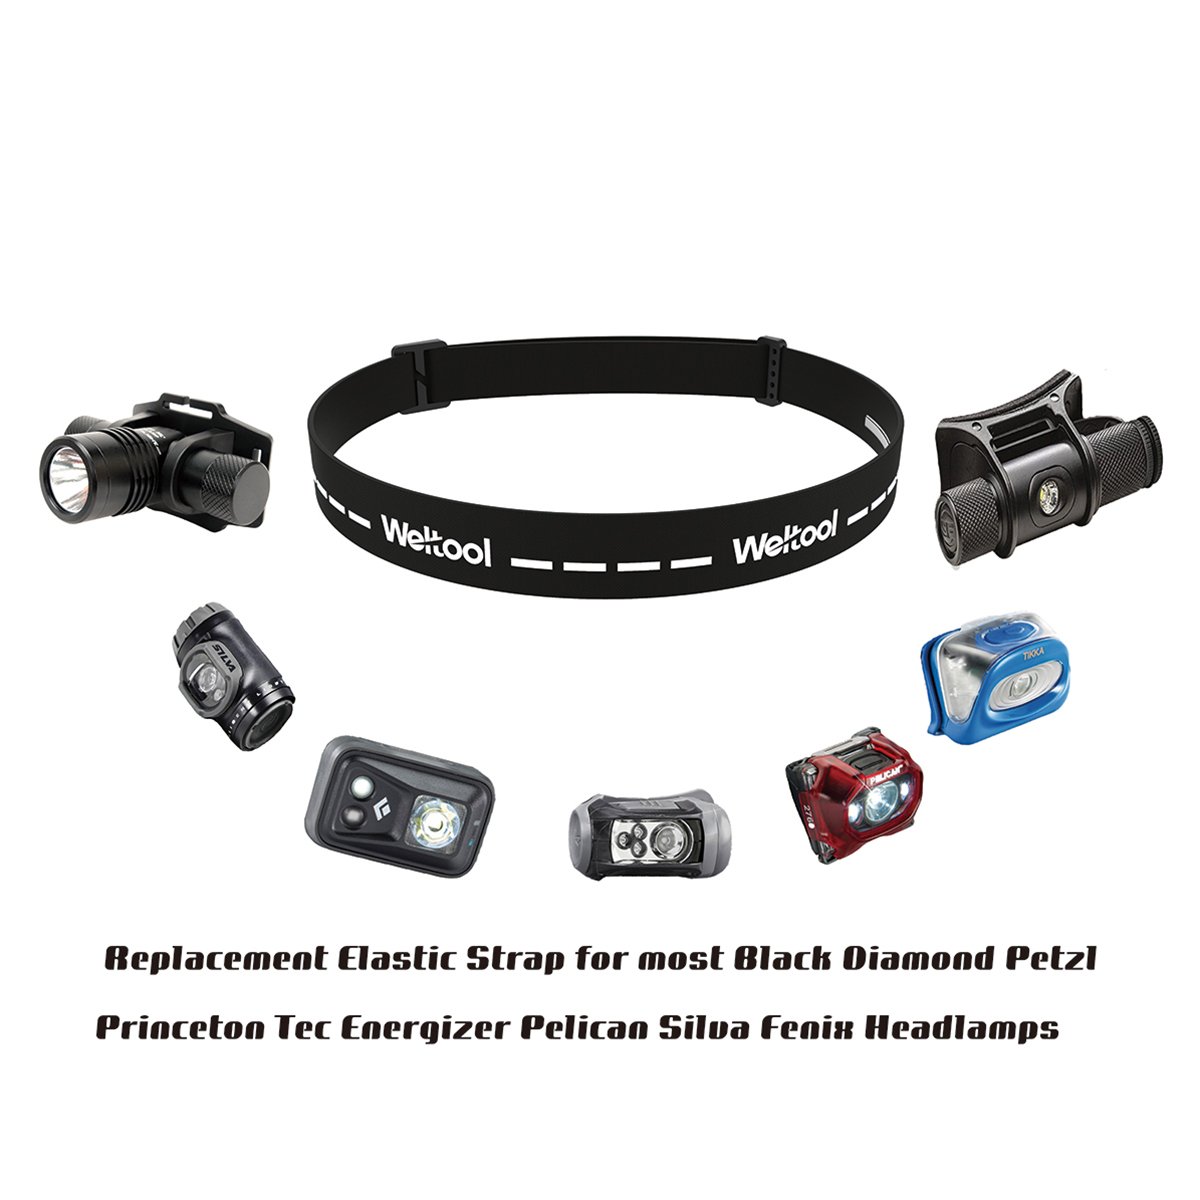 Weltool Elastic Headlamp Strap Replacement Headband for Most Black Diamond Petzl Energizer Pelican Fenix Headlamps 1”Width Comfortable Band